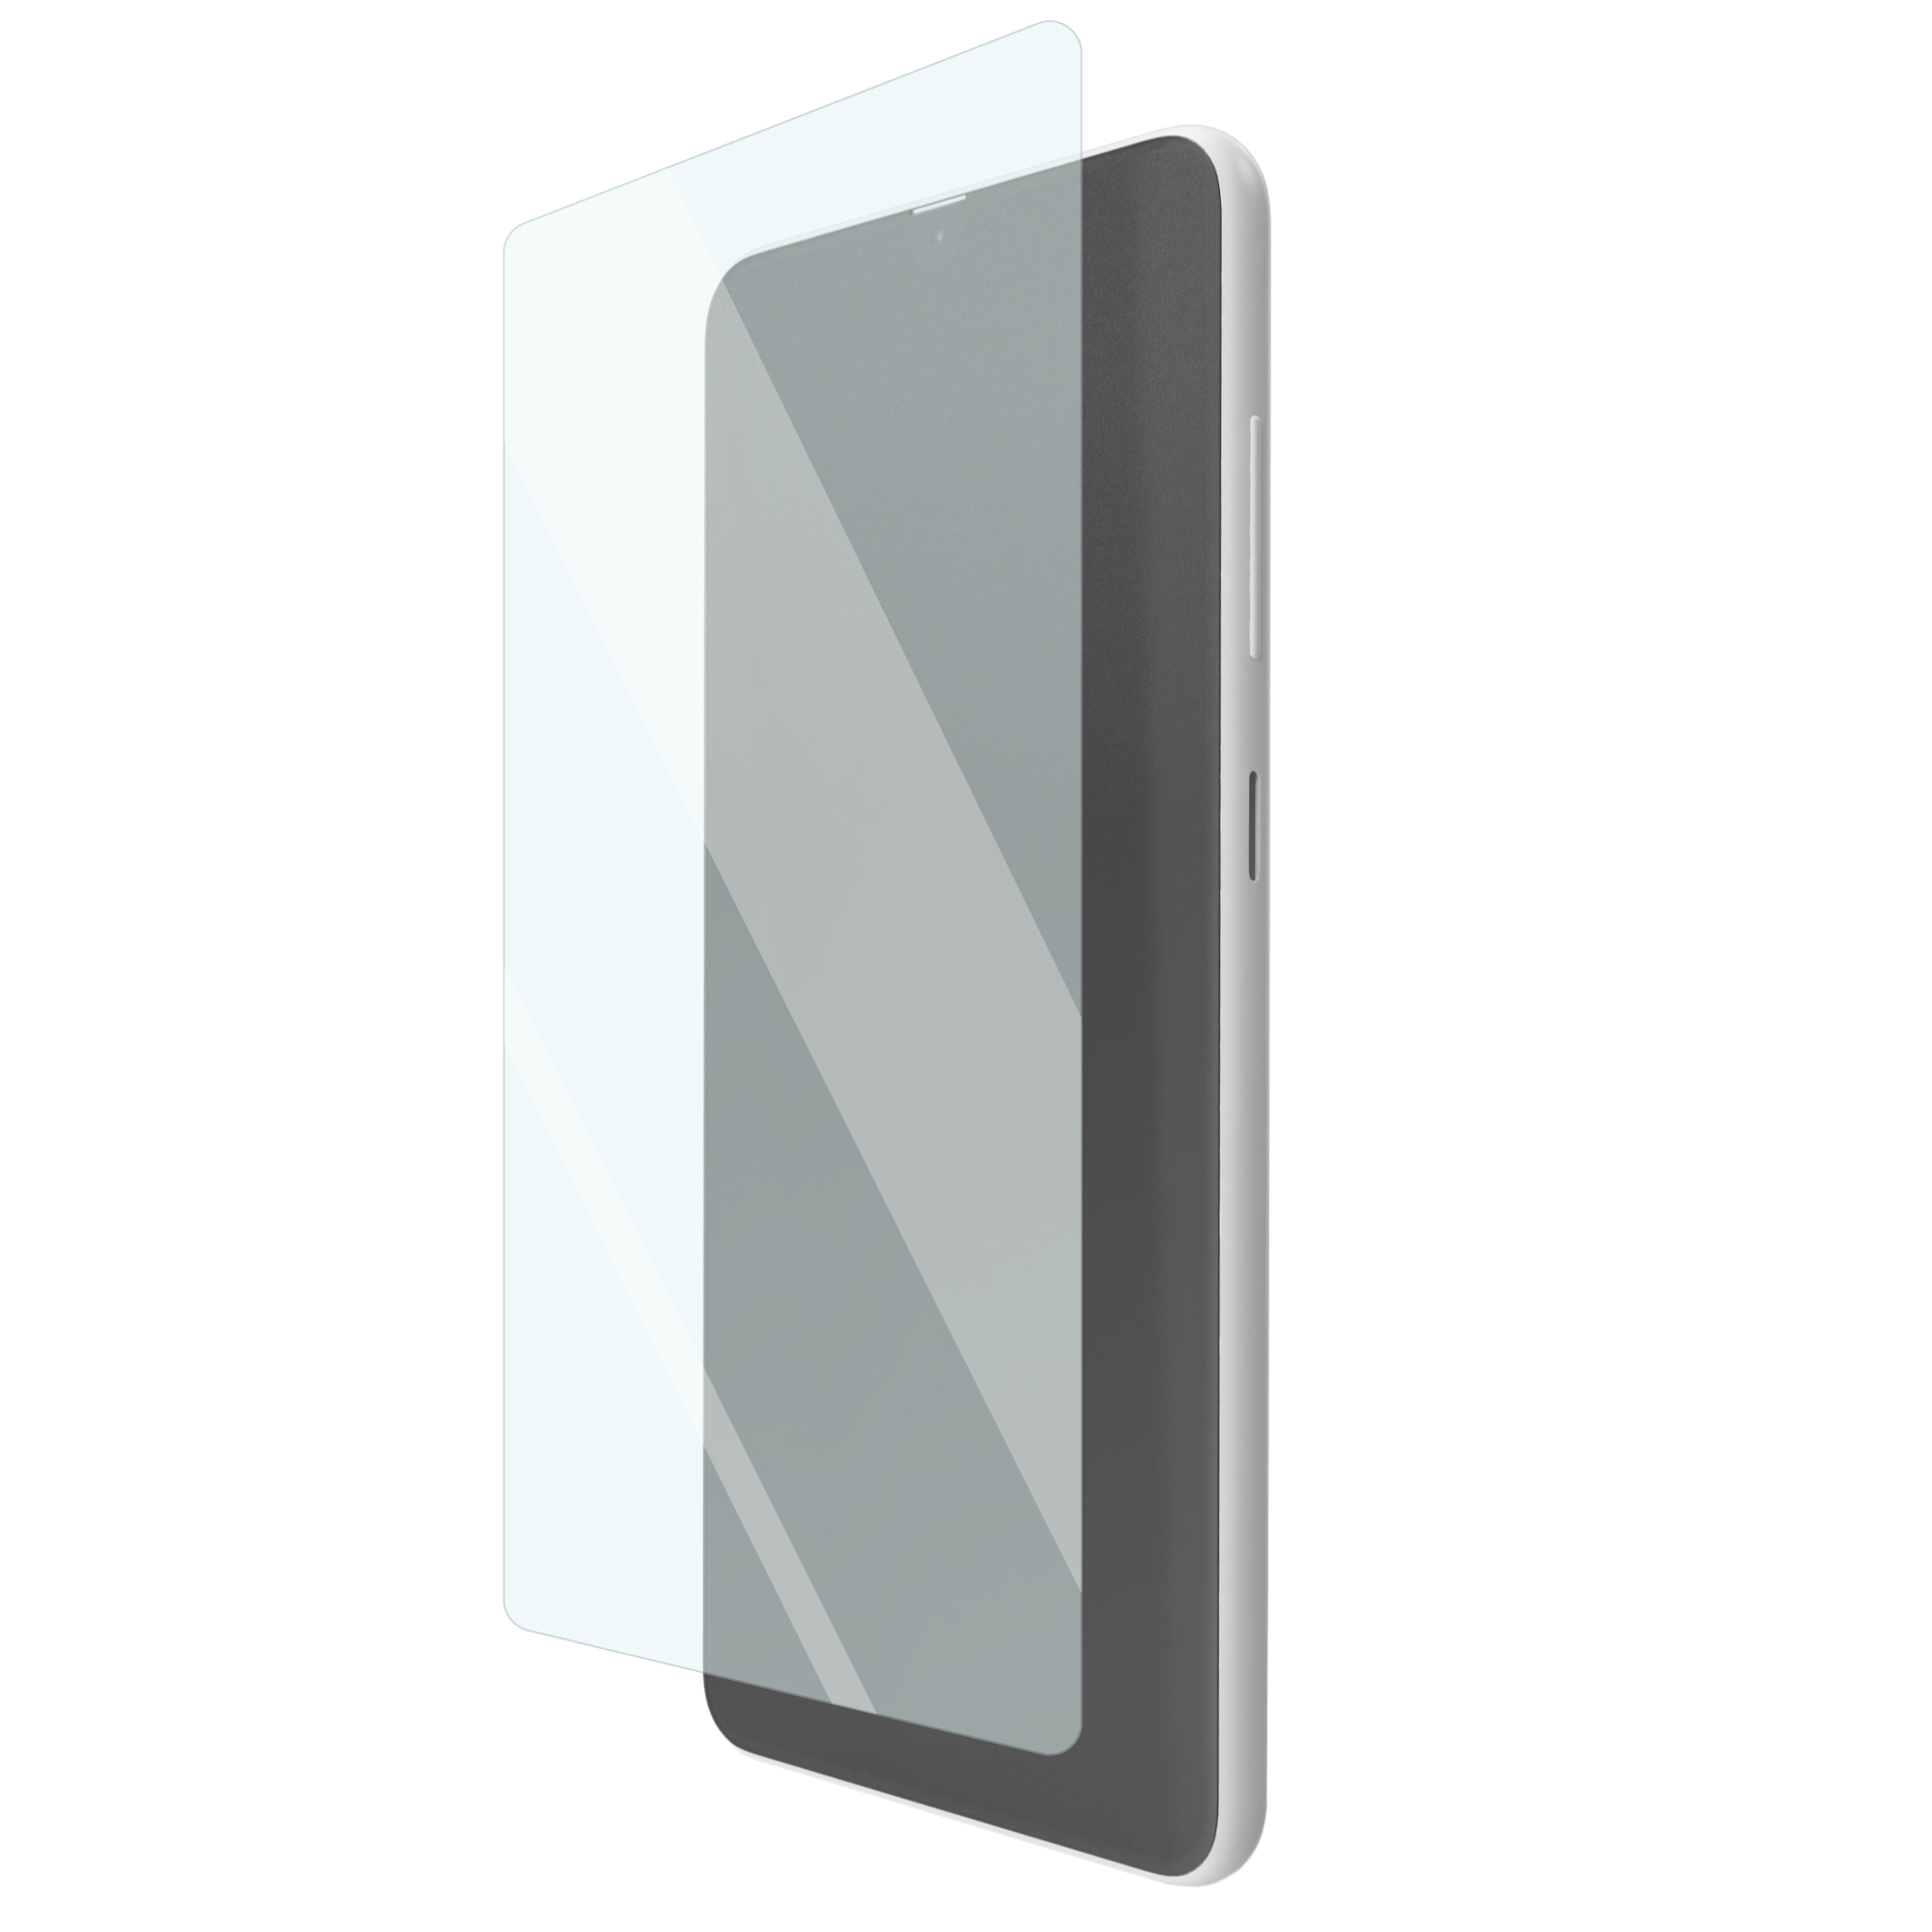 Folie de protectie silicon ShieldUP HiTech Regenerable pentru Apple iPhone 11 Pro Max thumb